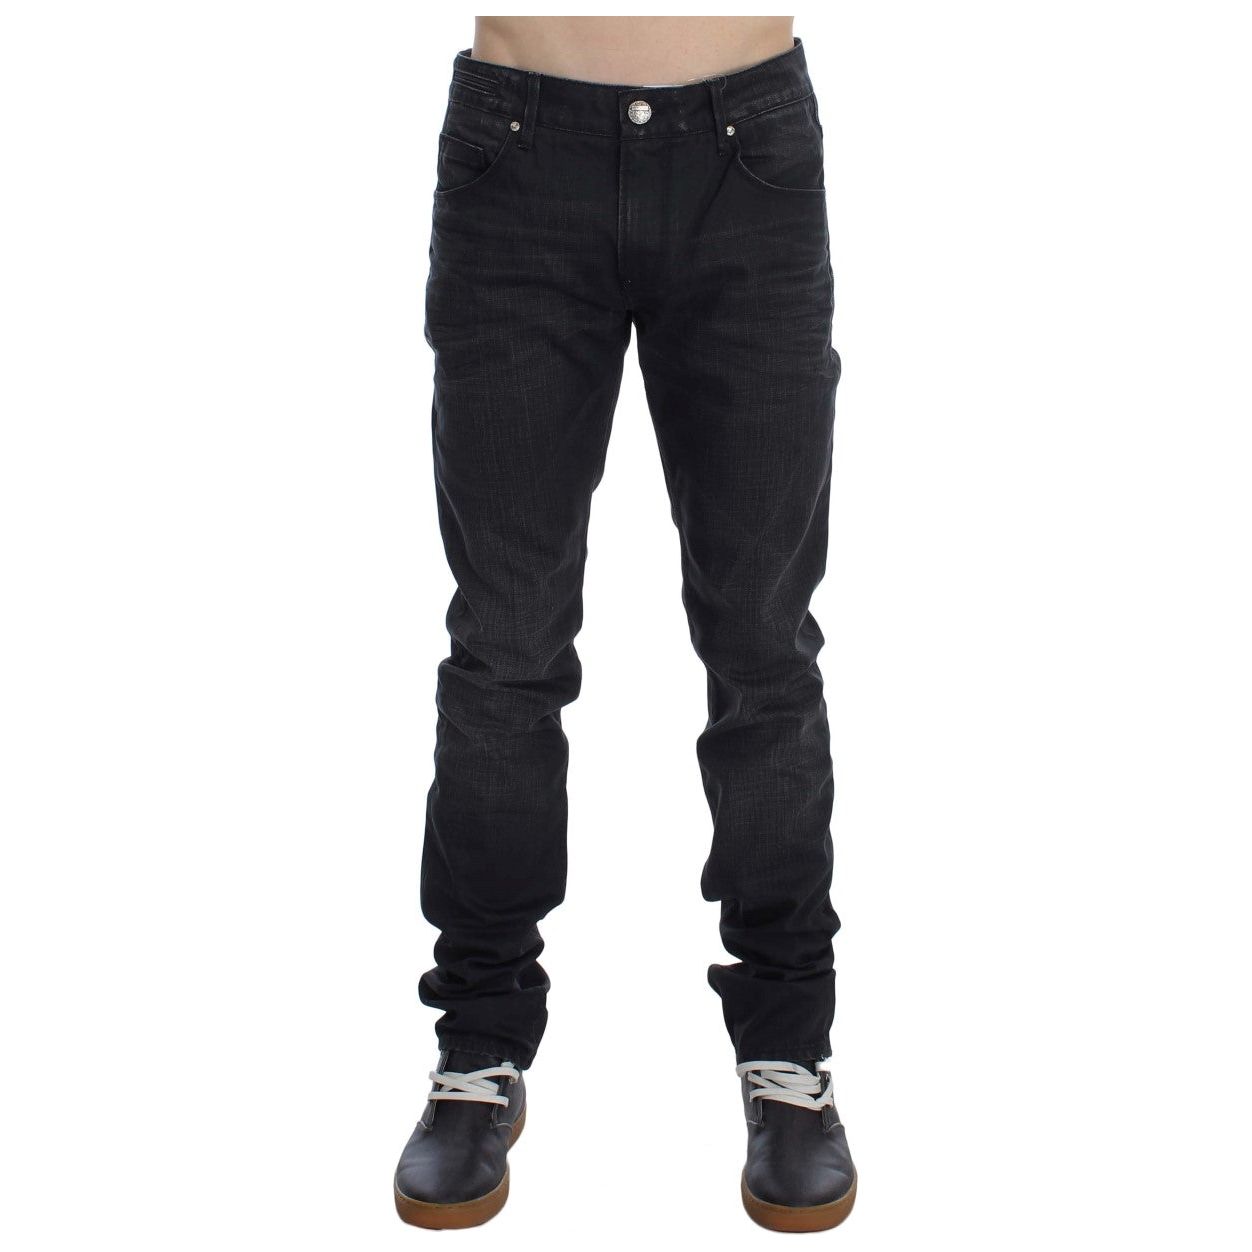 Acht Sleek Gray Slim Fit Italian Mens Jeans gray-cotton-skinny-slim-fit-jeans 298809-gray-cotton-skinny-slim-fit-jeans.jpg